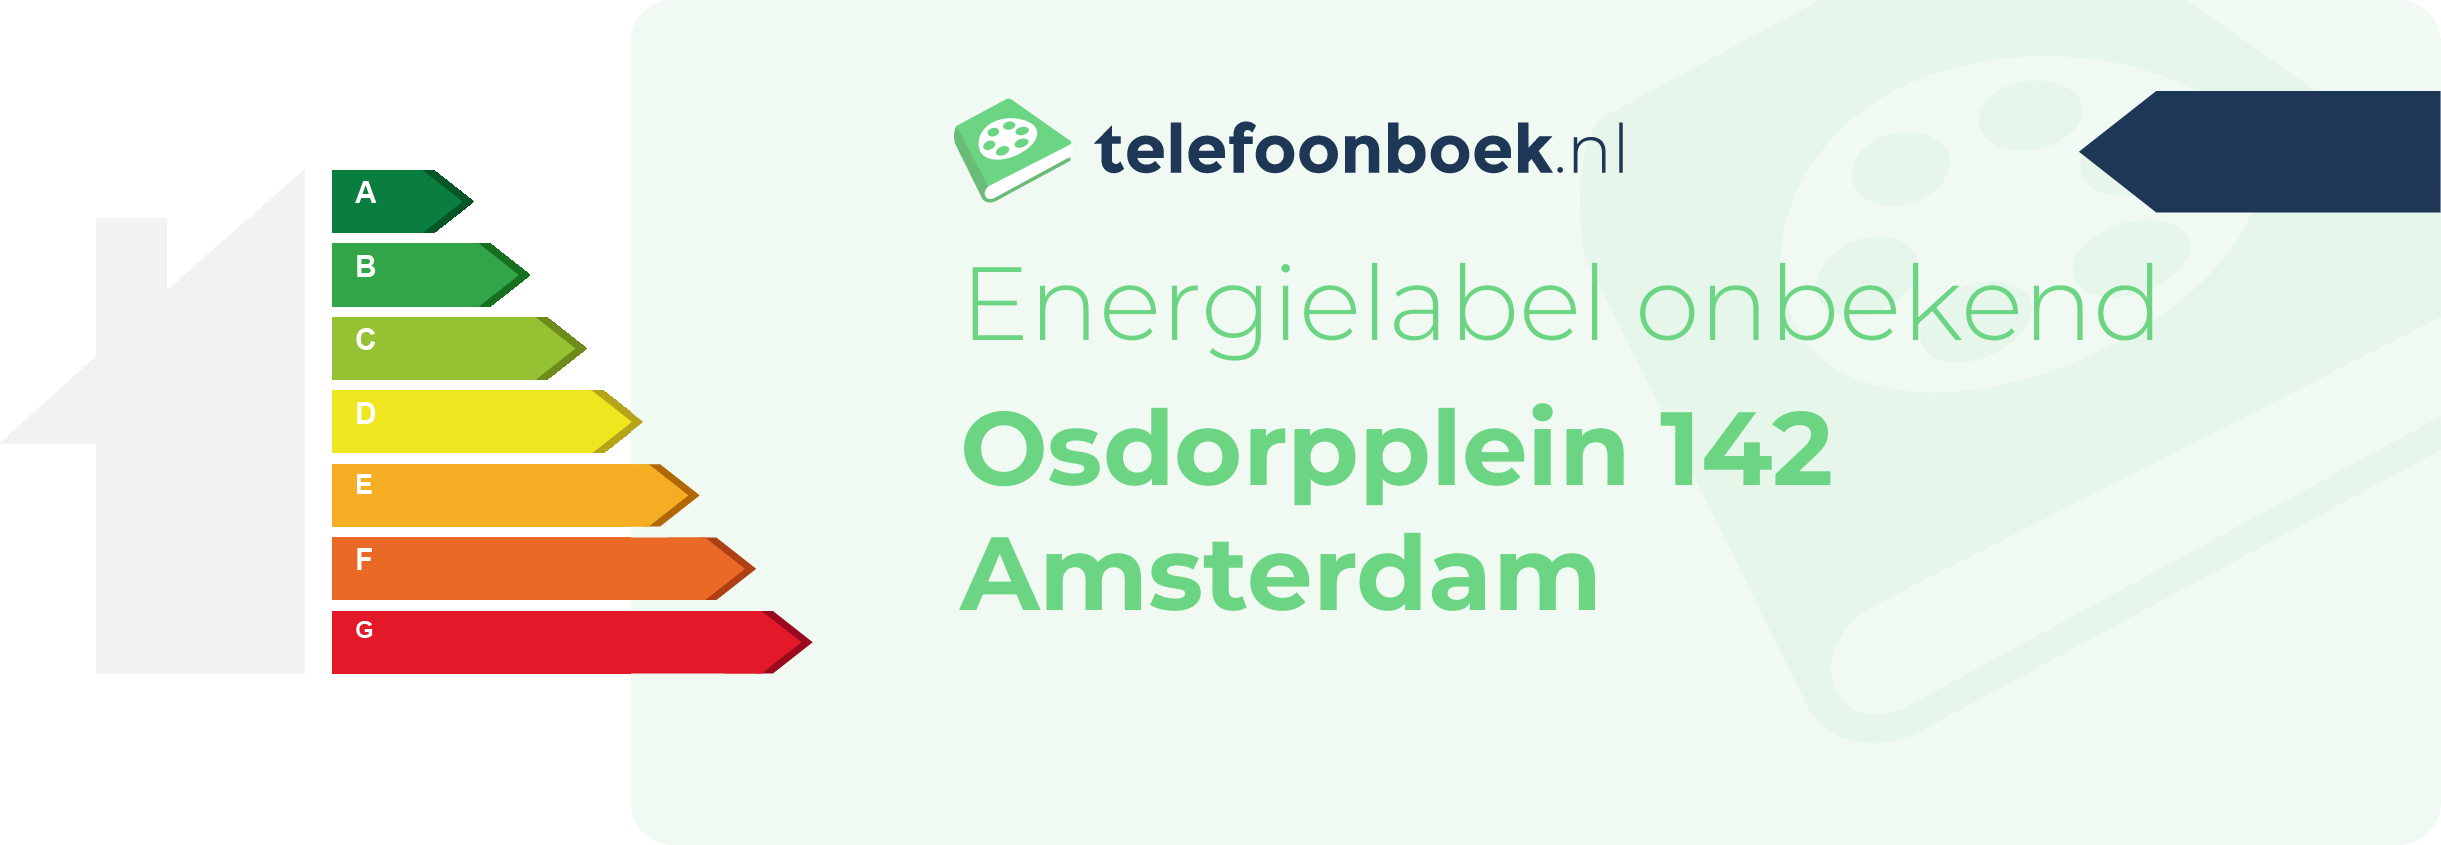 Energielabel Osdorpplein 142 Amsterdam